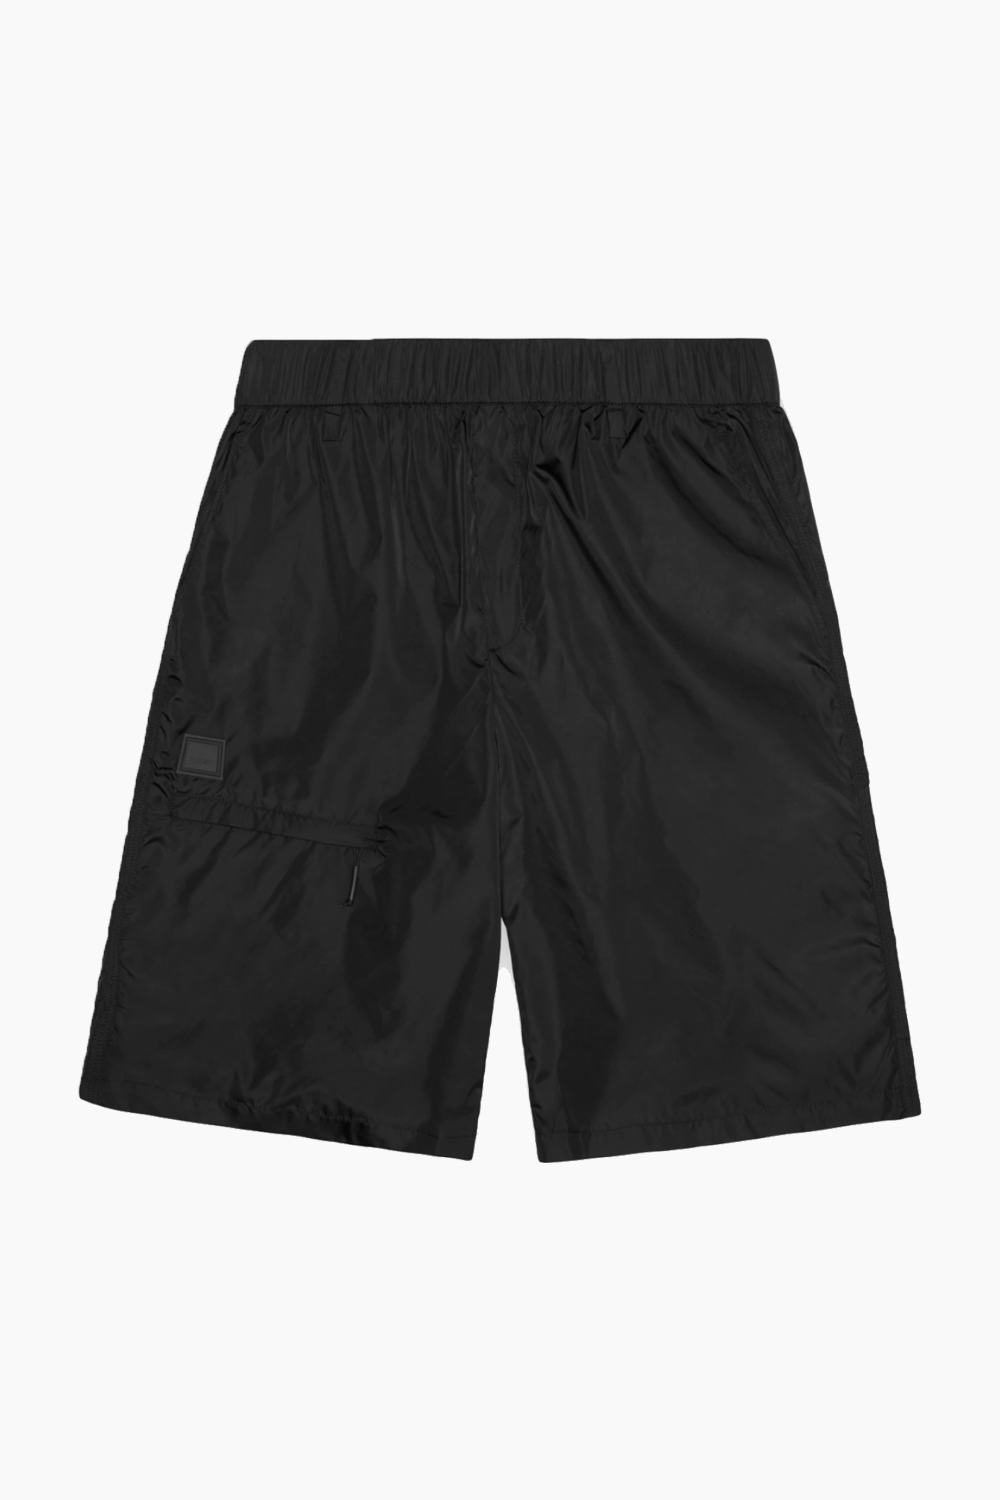 Shorts Regular - Black - Rains - Sort XS